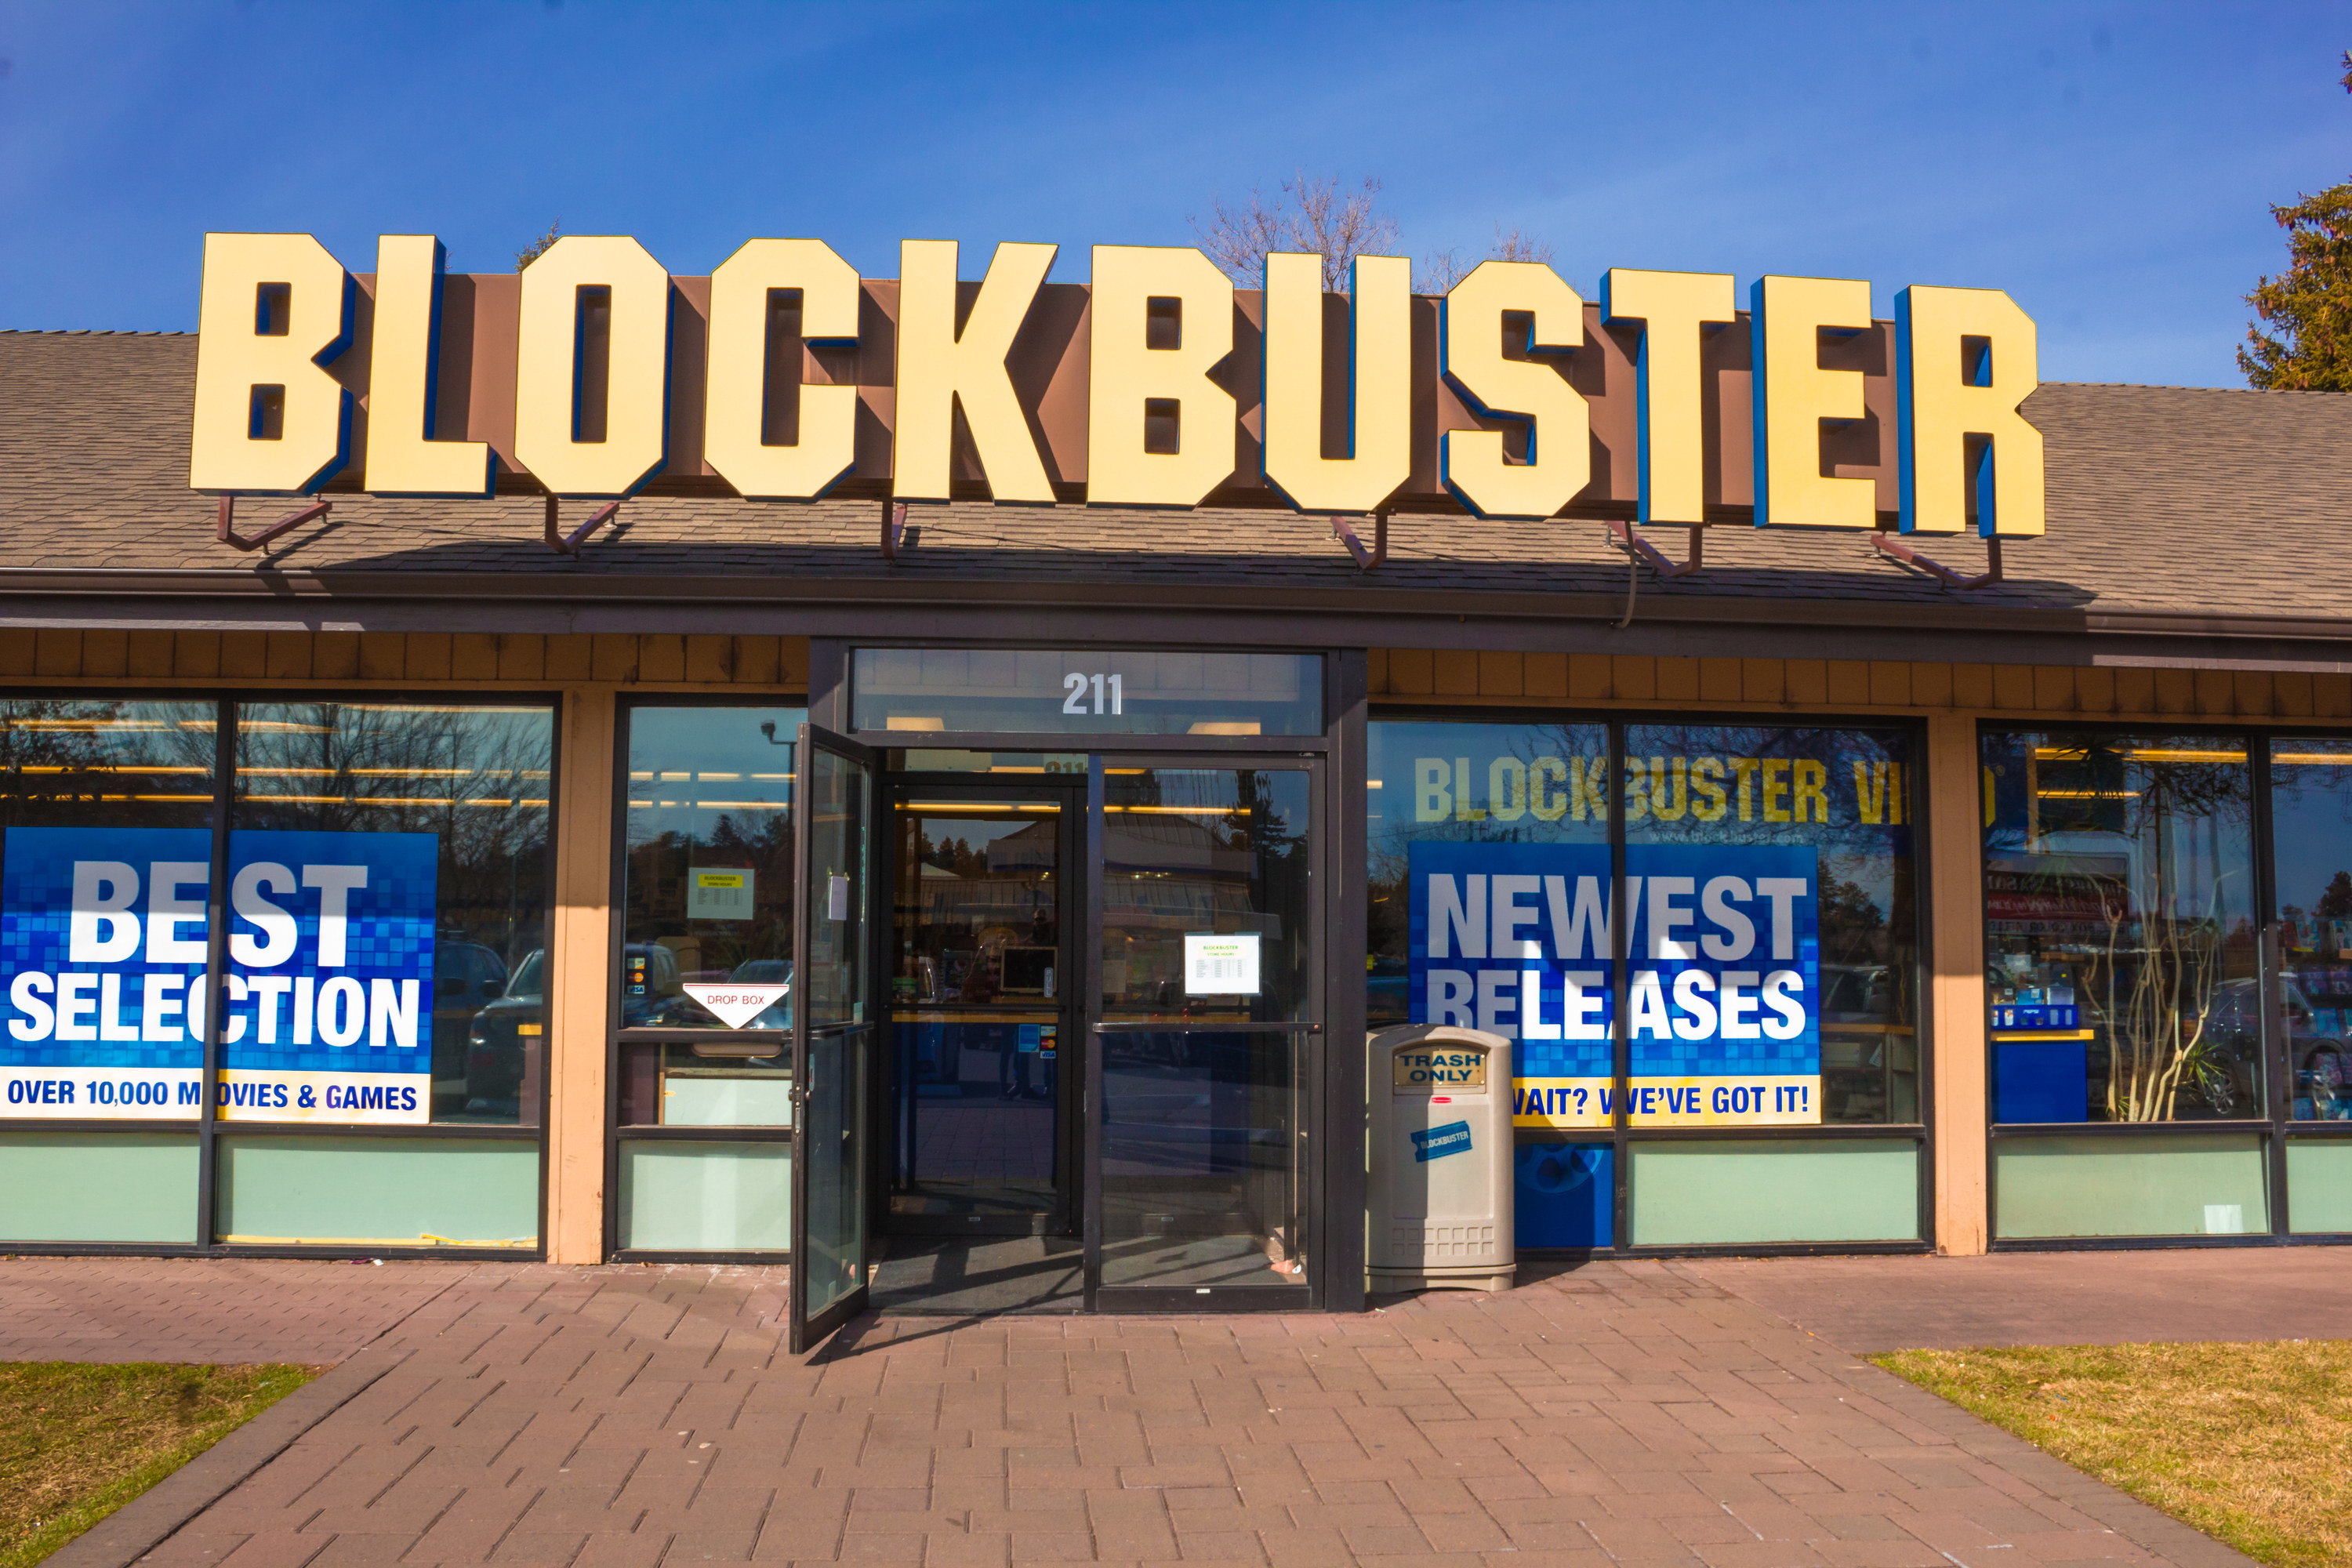 A Blockbuster storefront